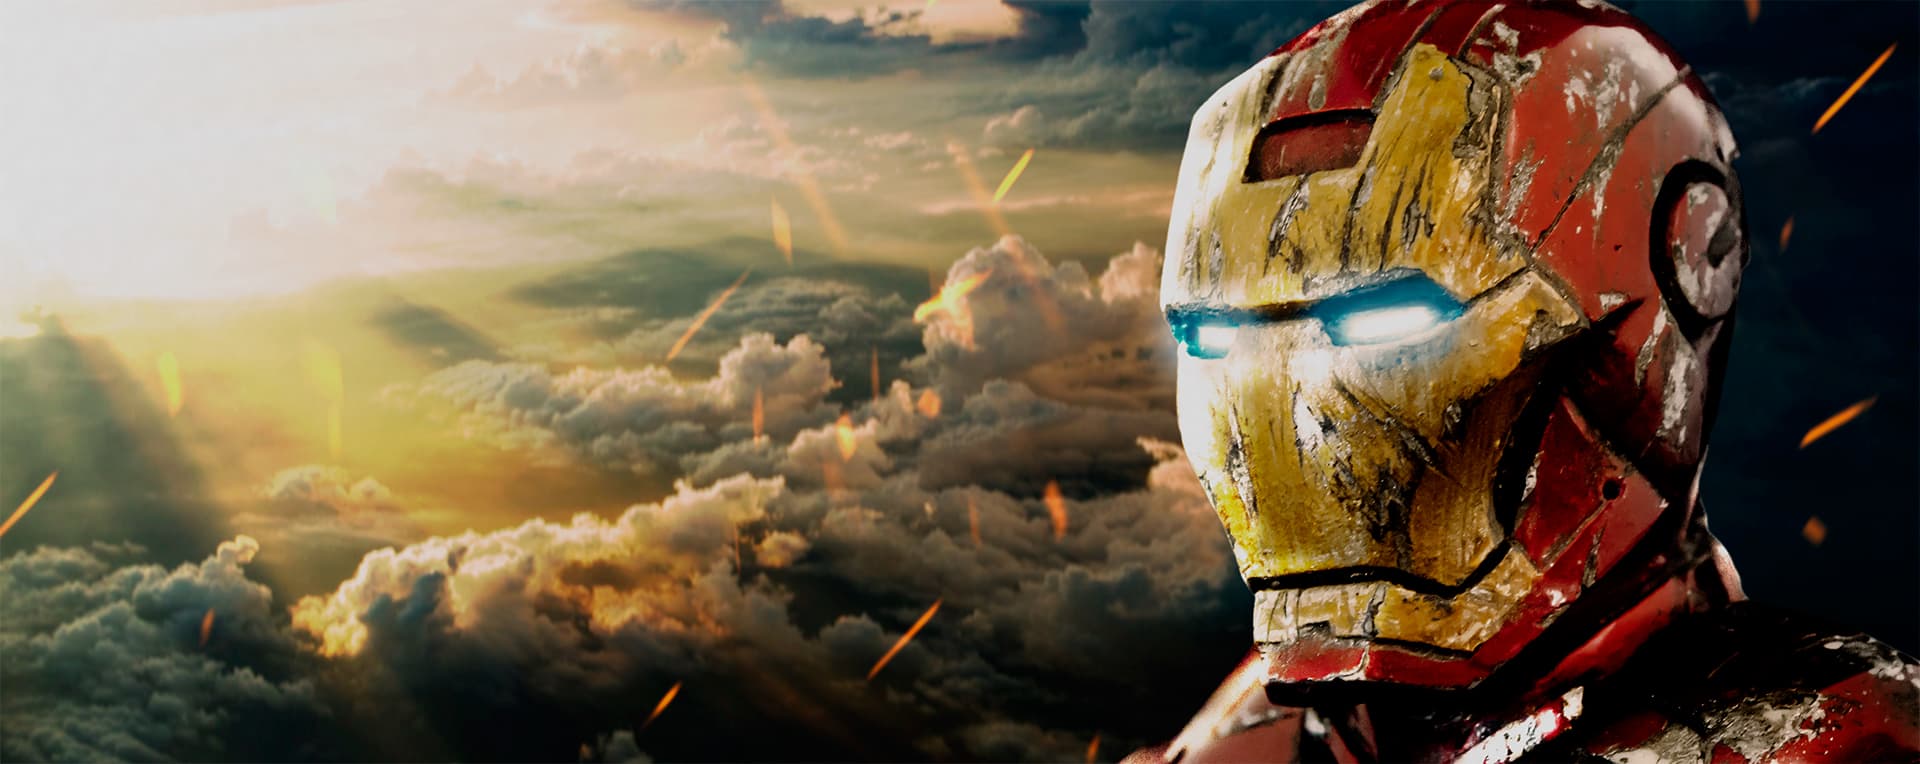 Iron Man Painted by Luke Yates © 2014 The Sound of Machines